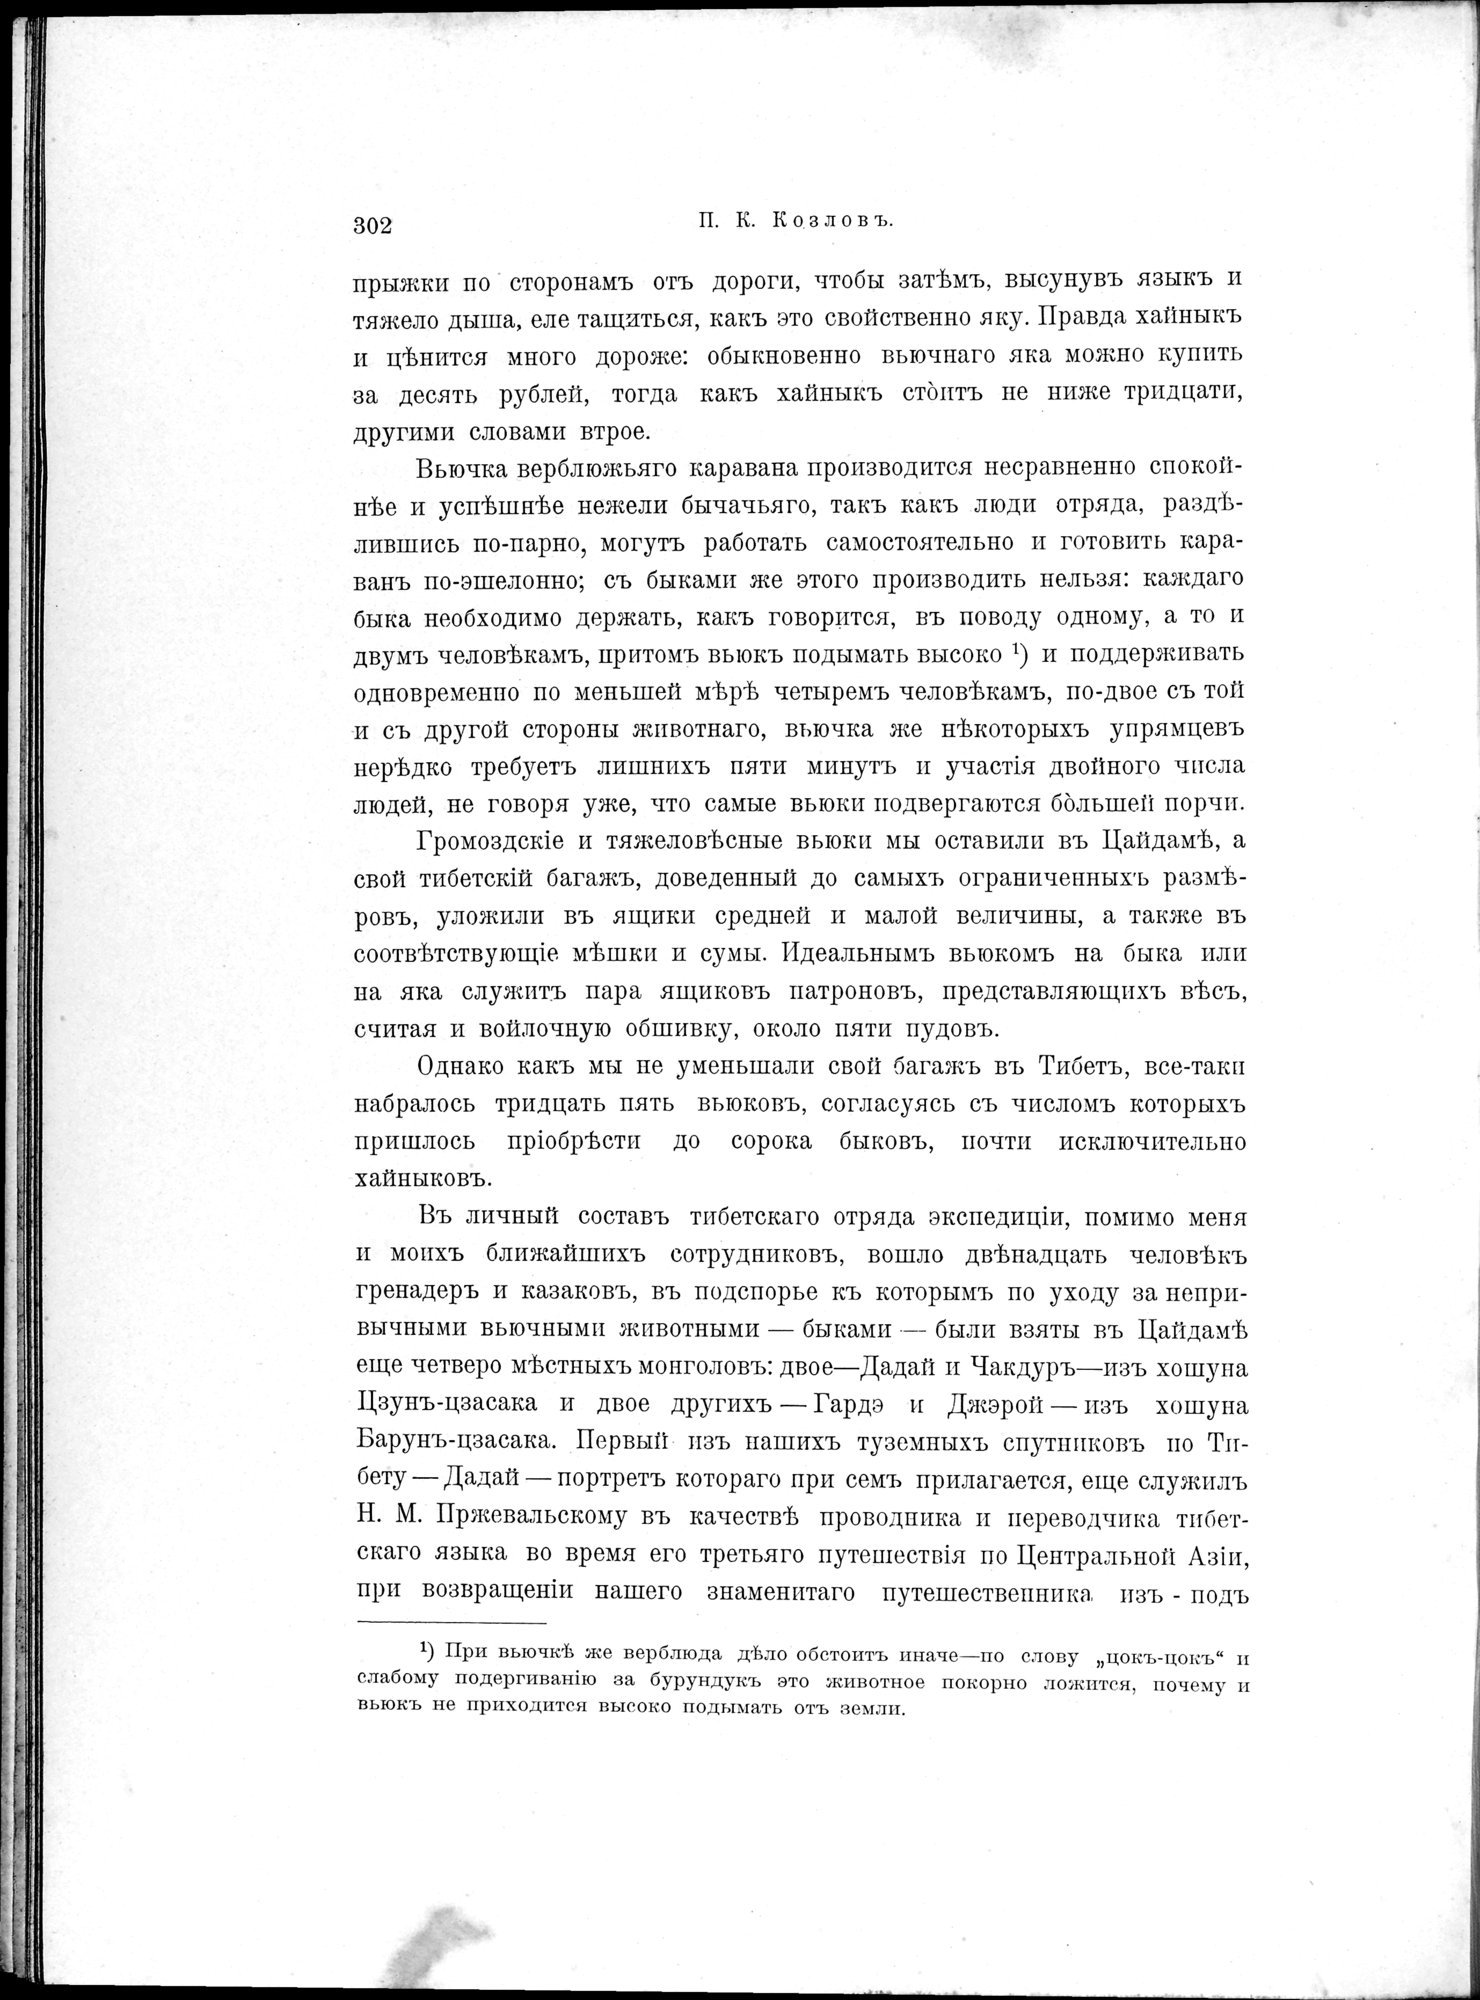 Mongoliia i Kam : vol.2 / Page 68 (Grayscale High Resolution Image)